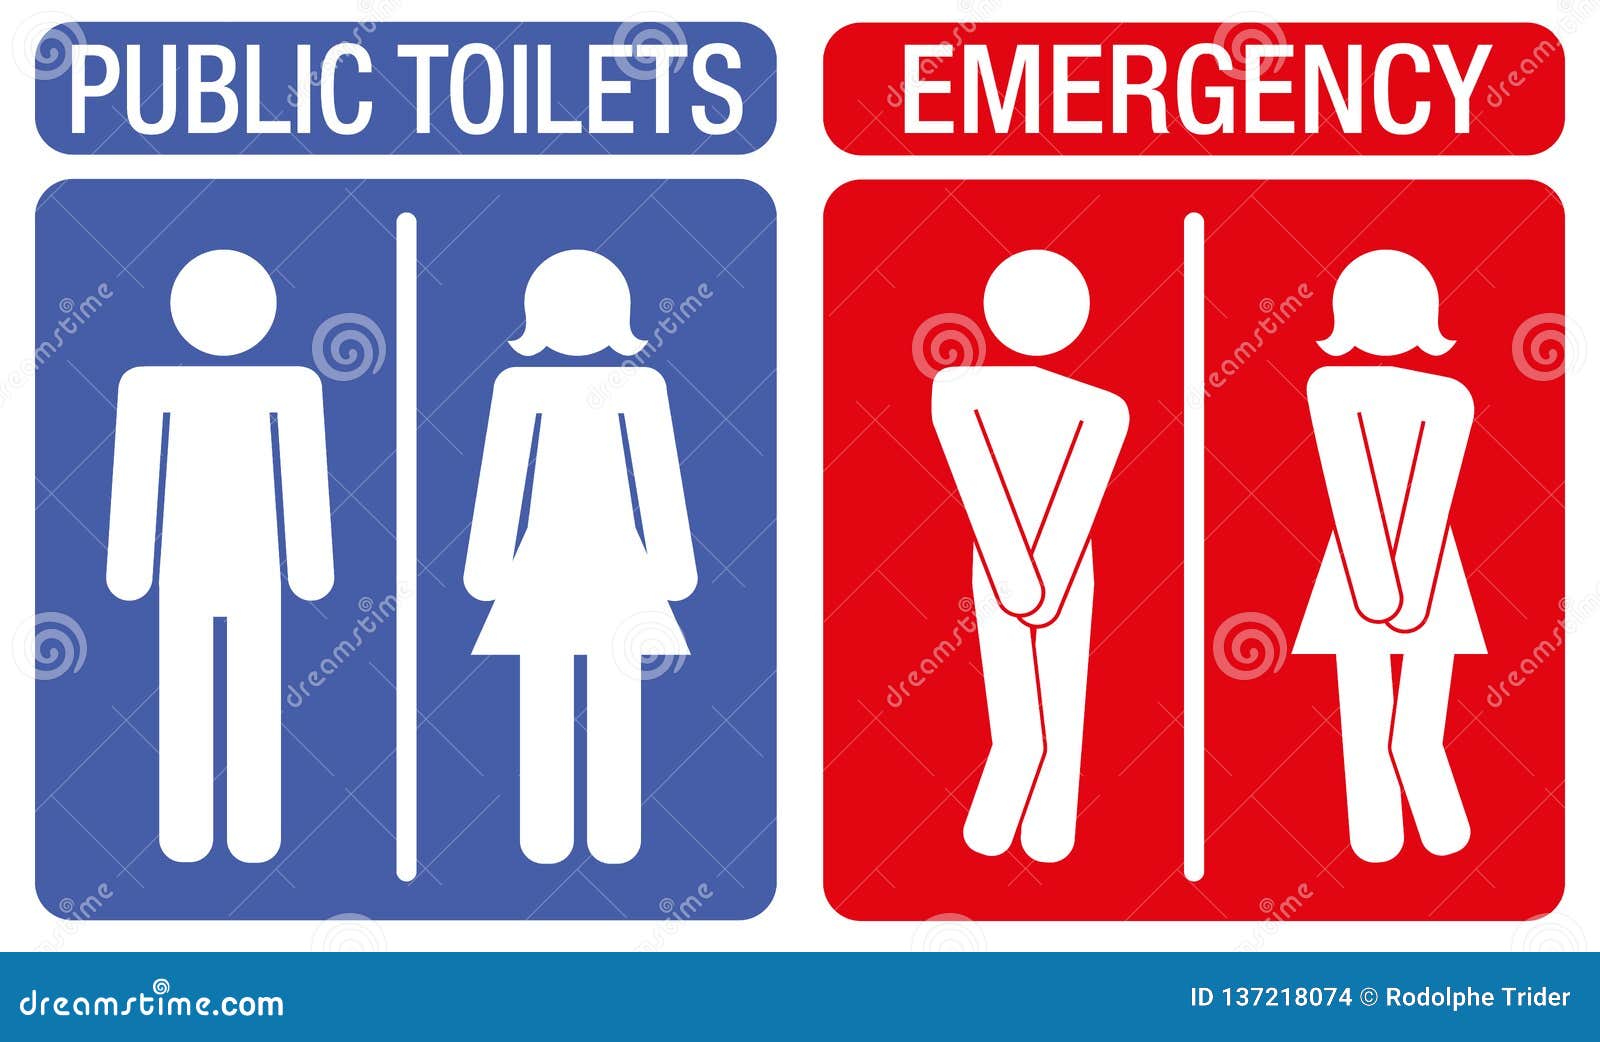 urge to urinate)